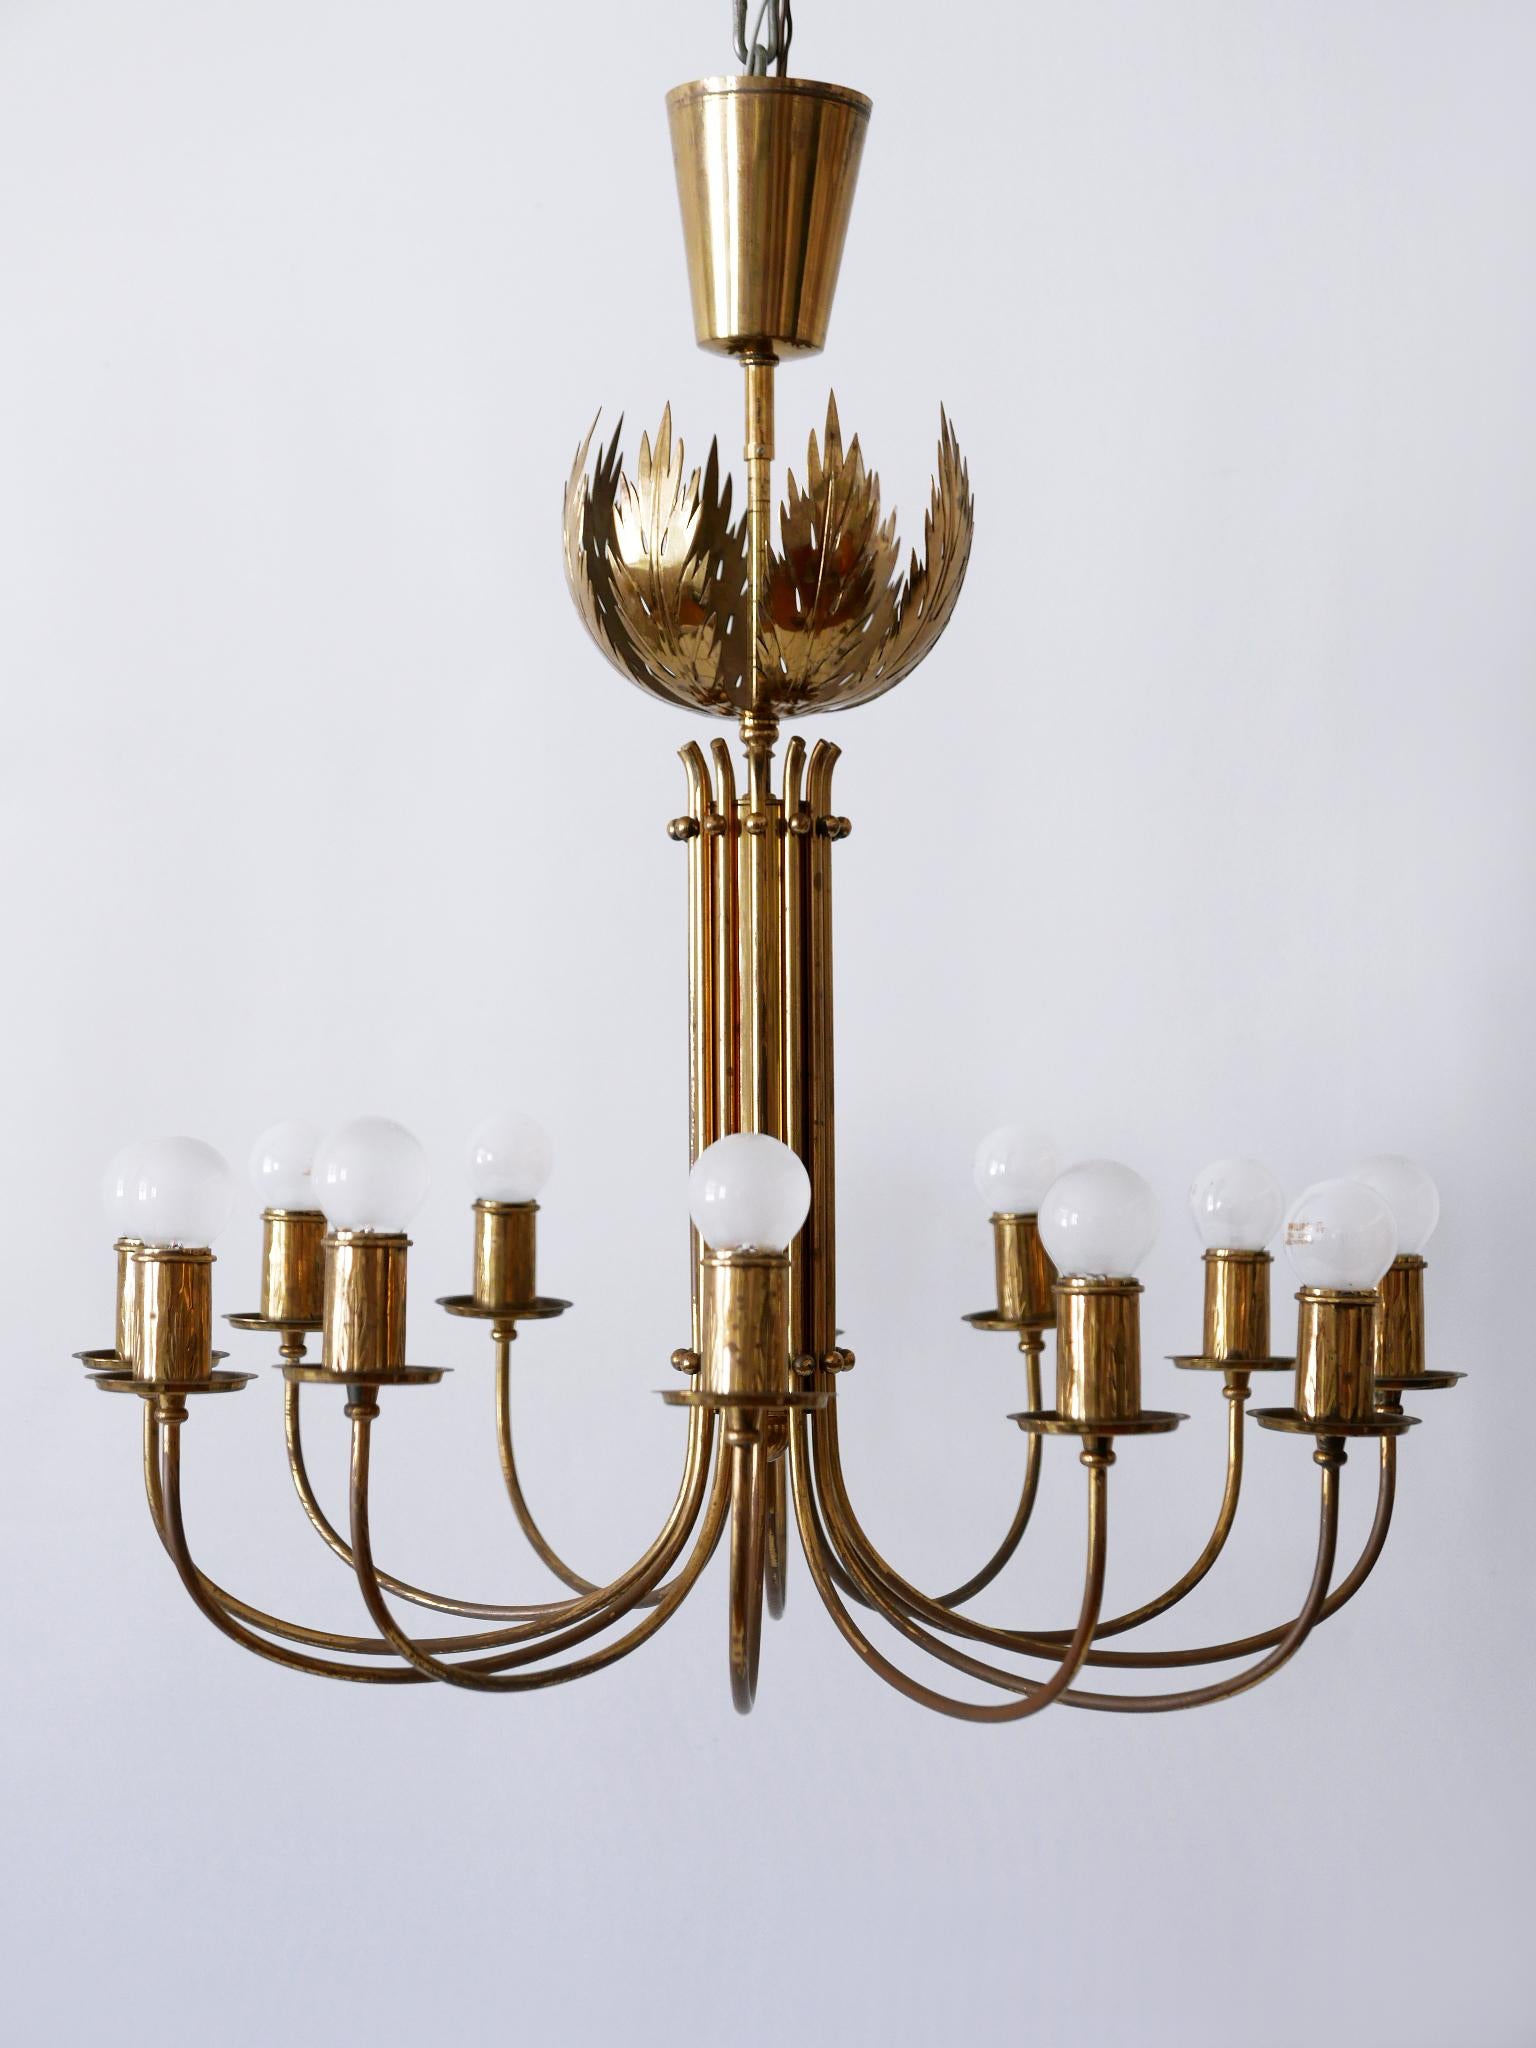 Rare 12-Armed Brass Chandeliers or Pendant Lamps by Vereinigte Werkstätten 1950s For Sale 7